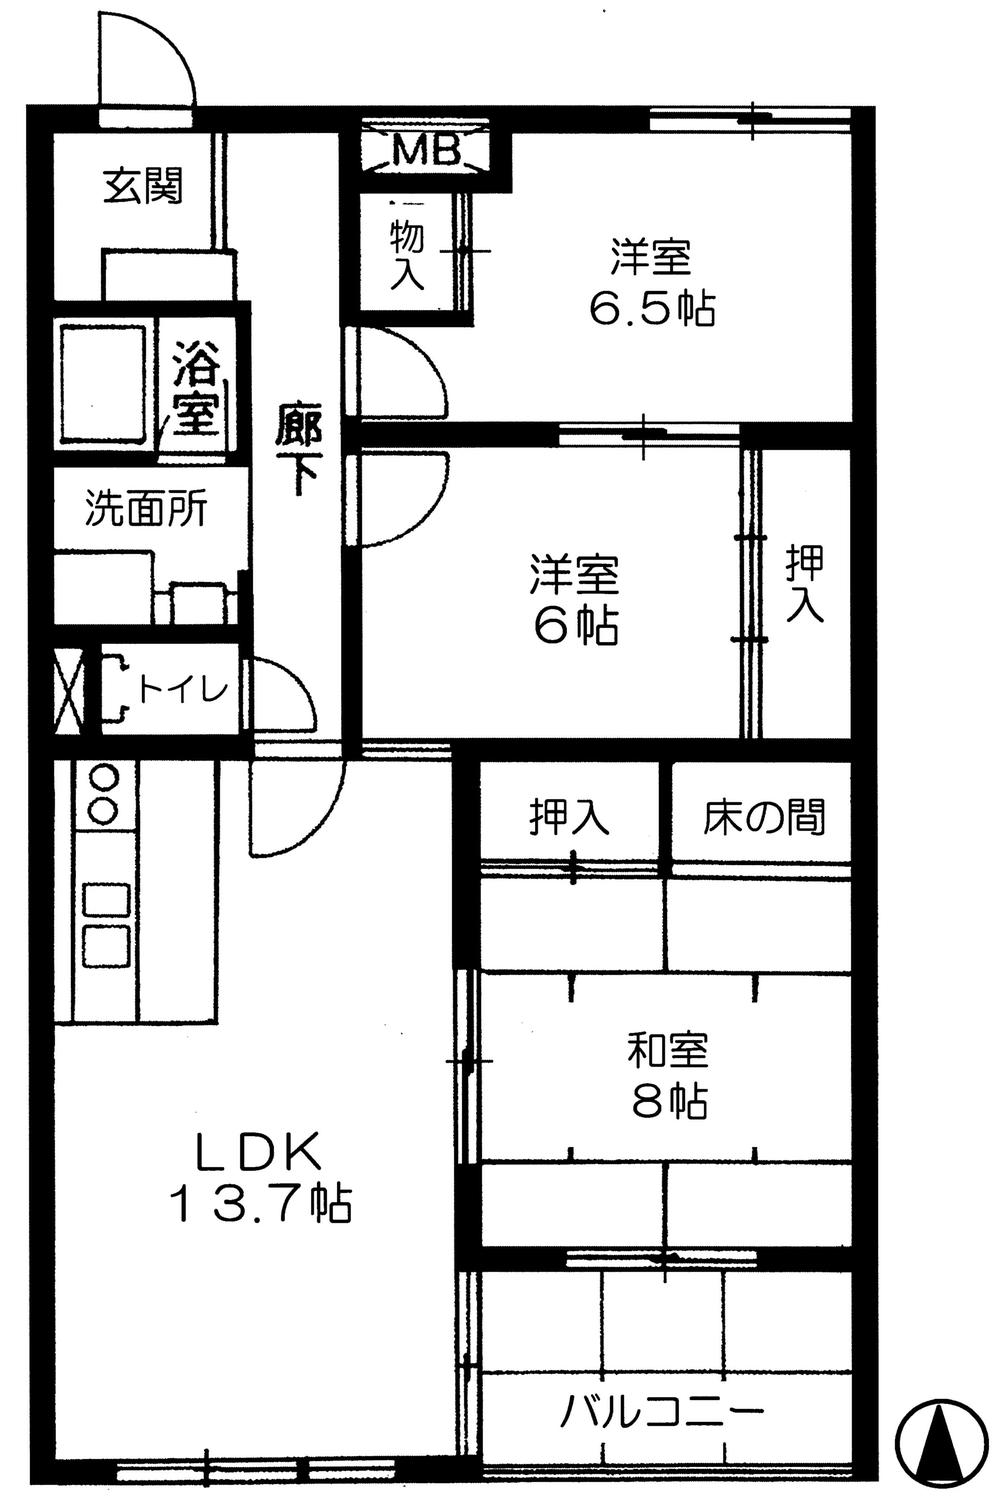 Floor plan. 3LDK, Price 9.8 million yen, Occupied area 77.59 sq m , Balcony area 6.26 sq m